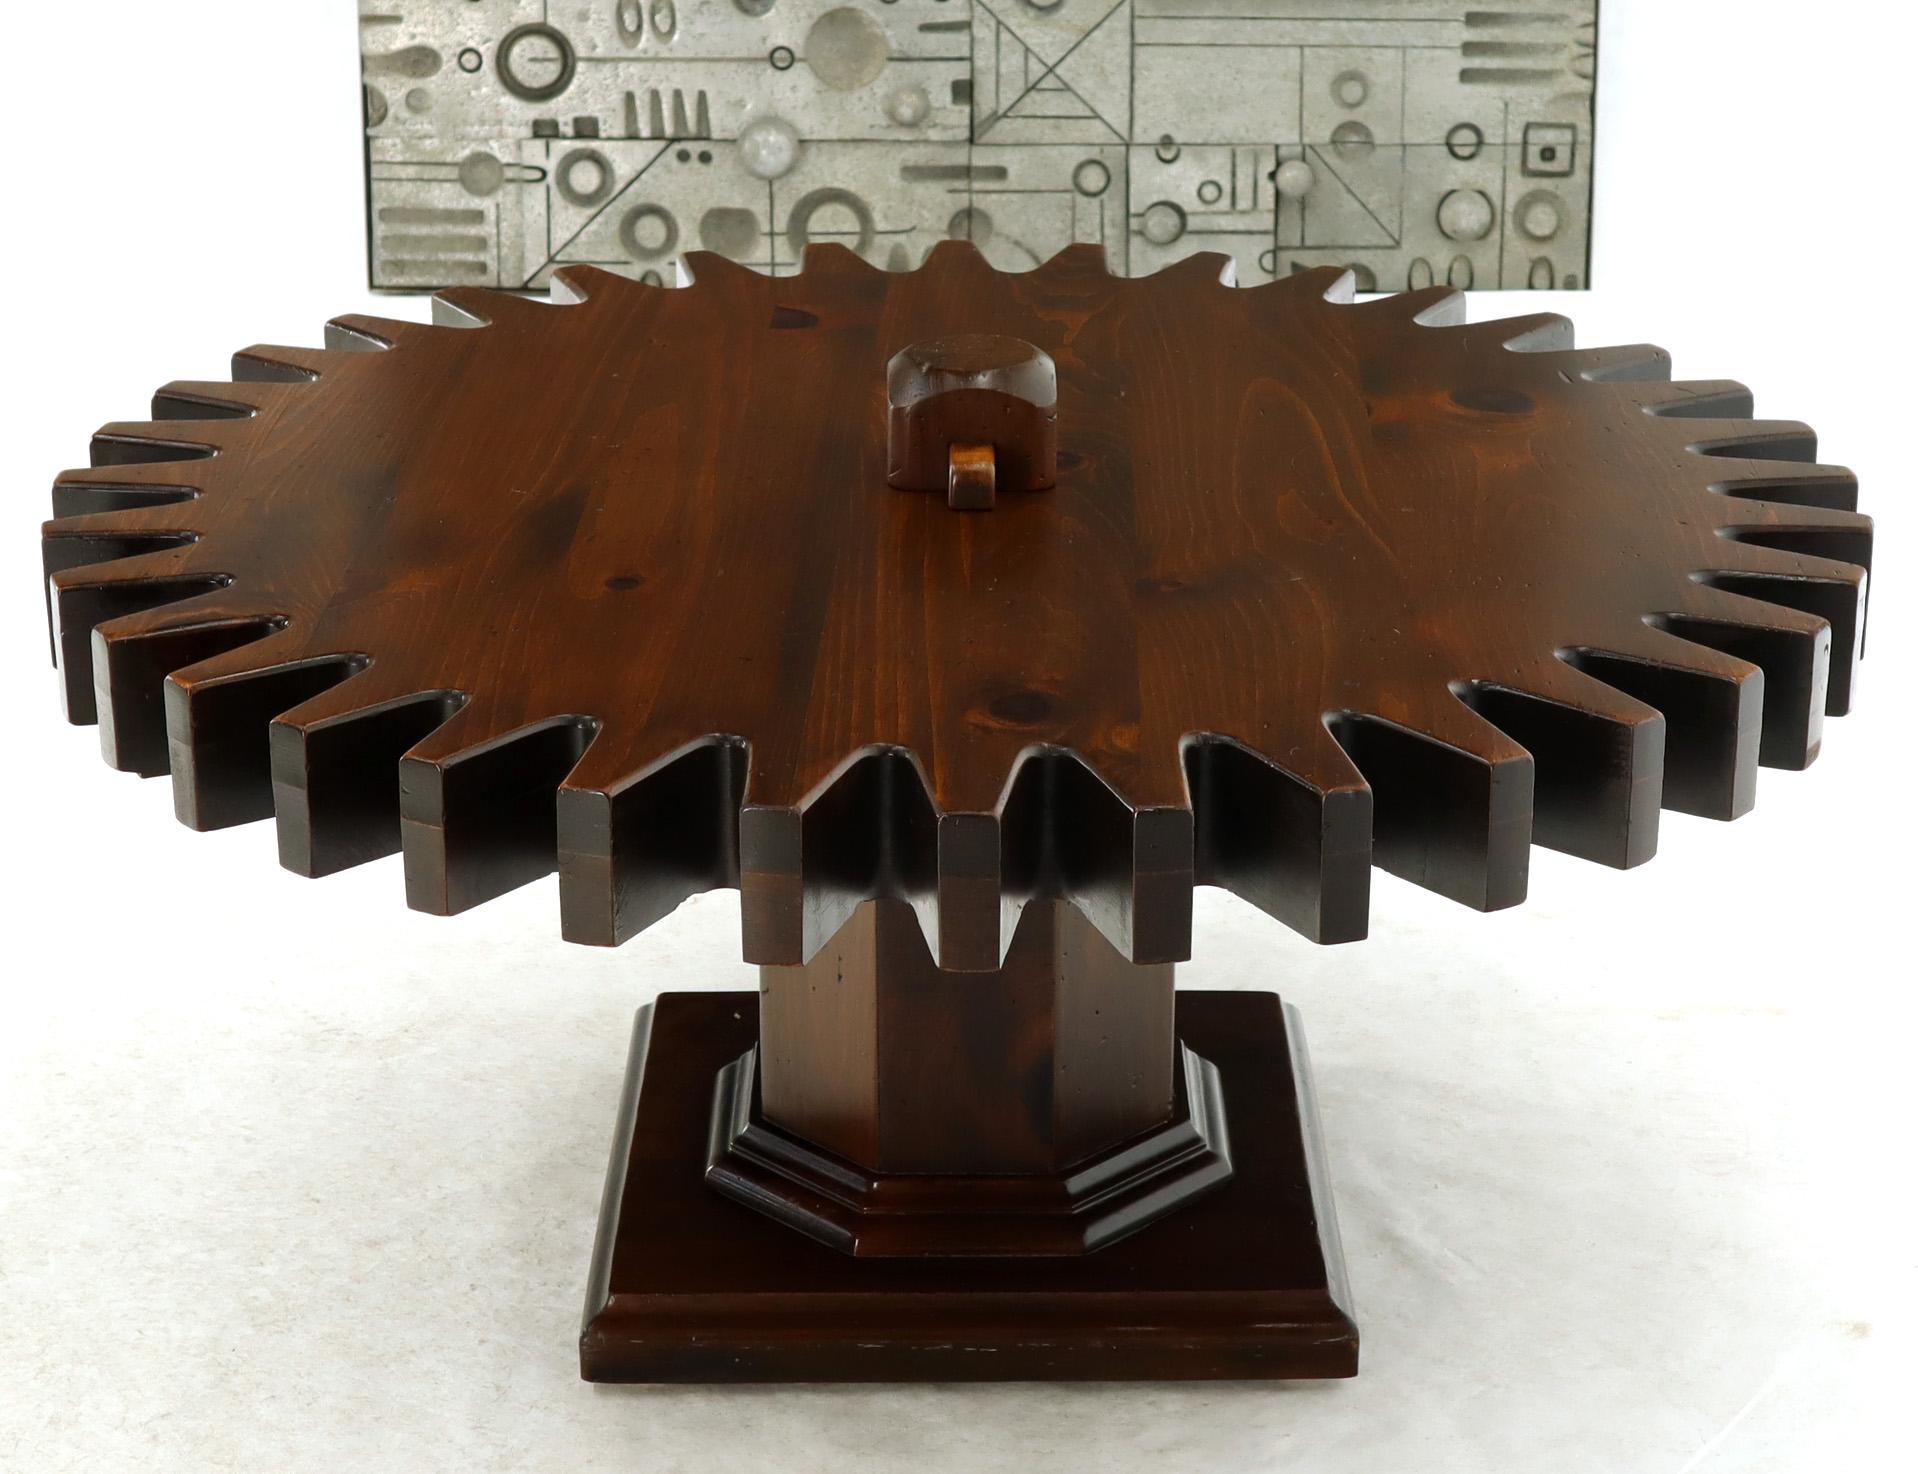 Very sharp looking Mid-Century Modern circa 1960s round gear top coffee table.
   